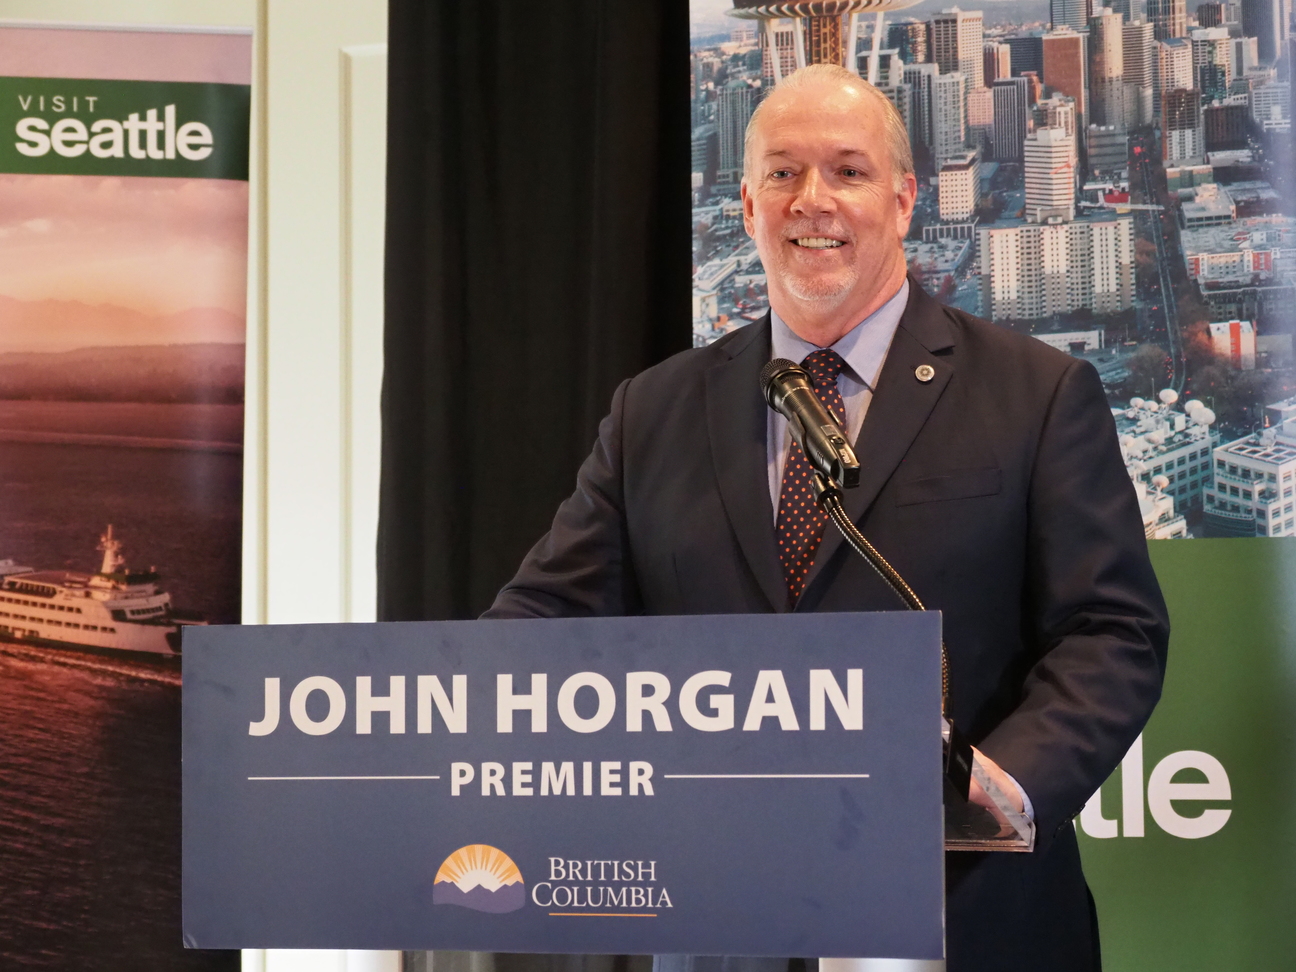 John Horgan speaking at a press conference